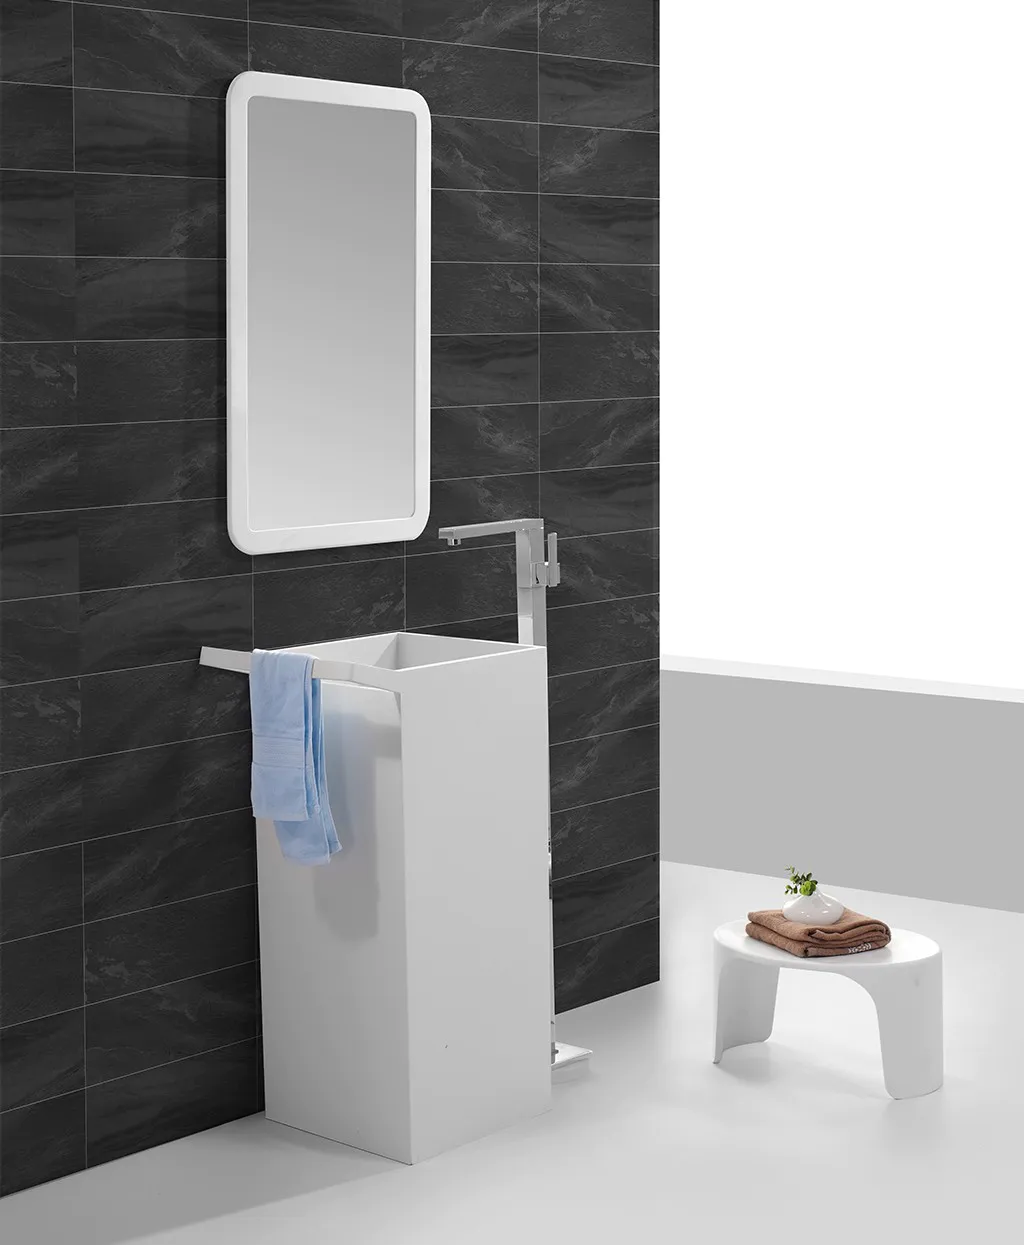 KingKonree rectangle sanitary ware wholesale design for home